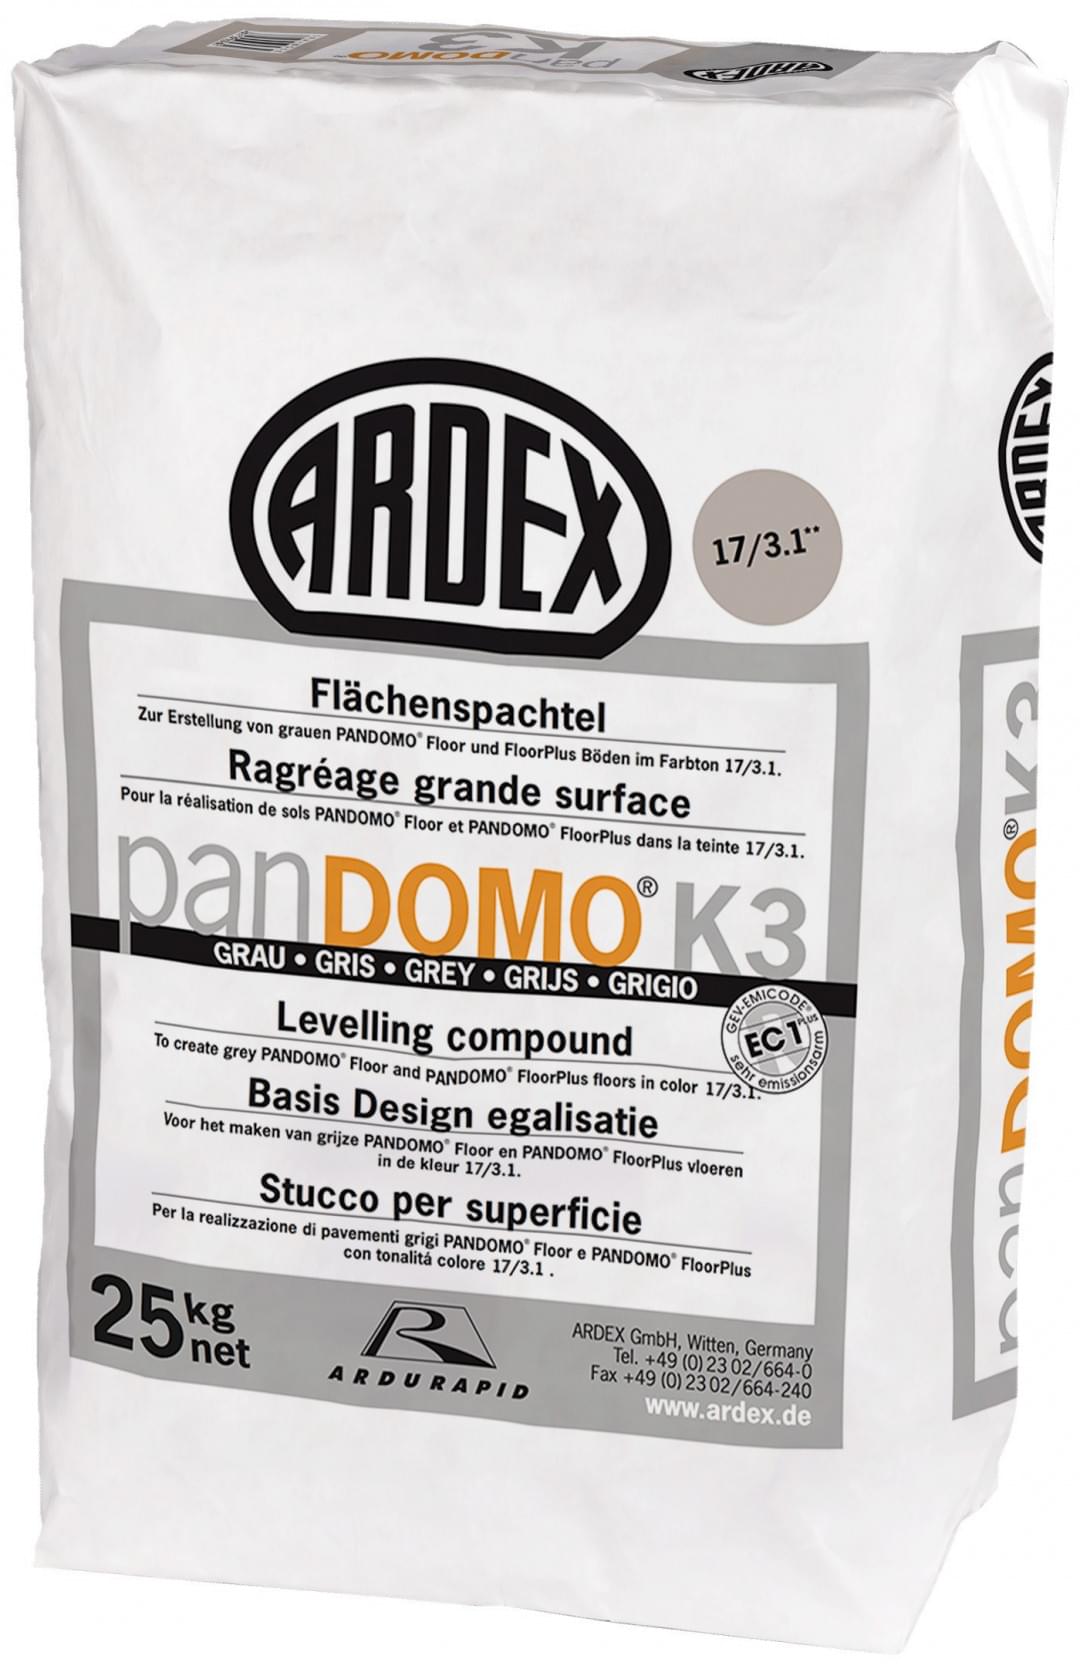 PANDOMO® K3 from ARDEX